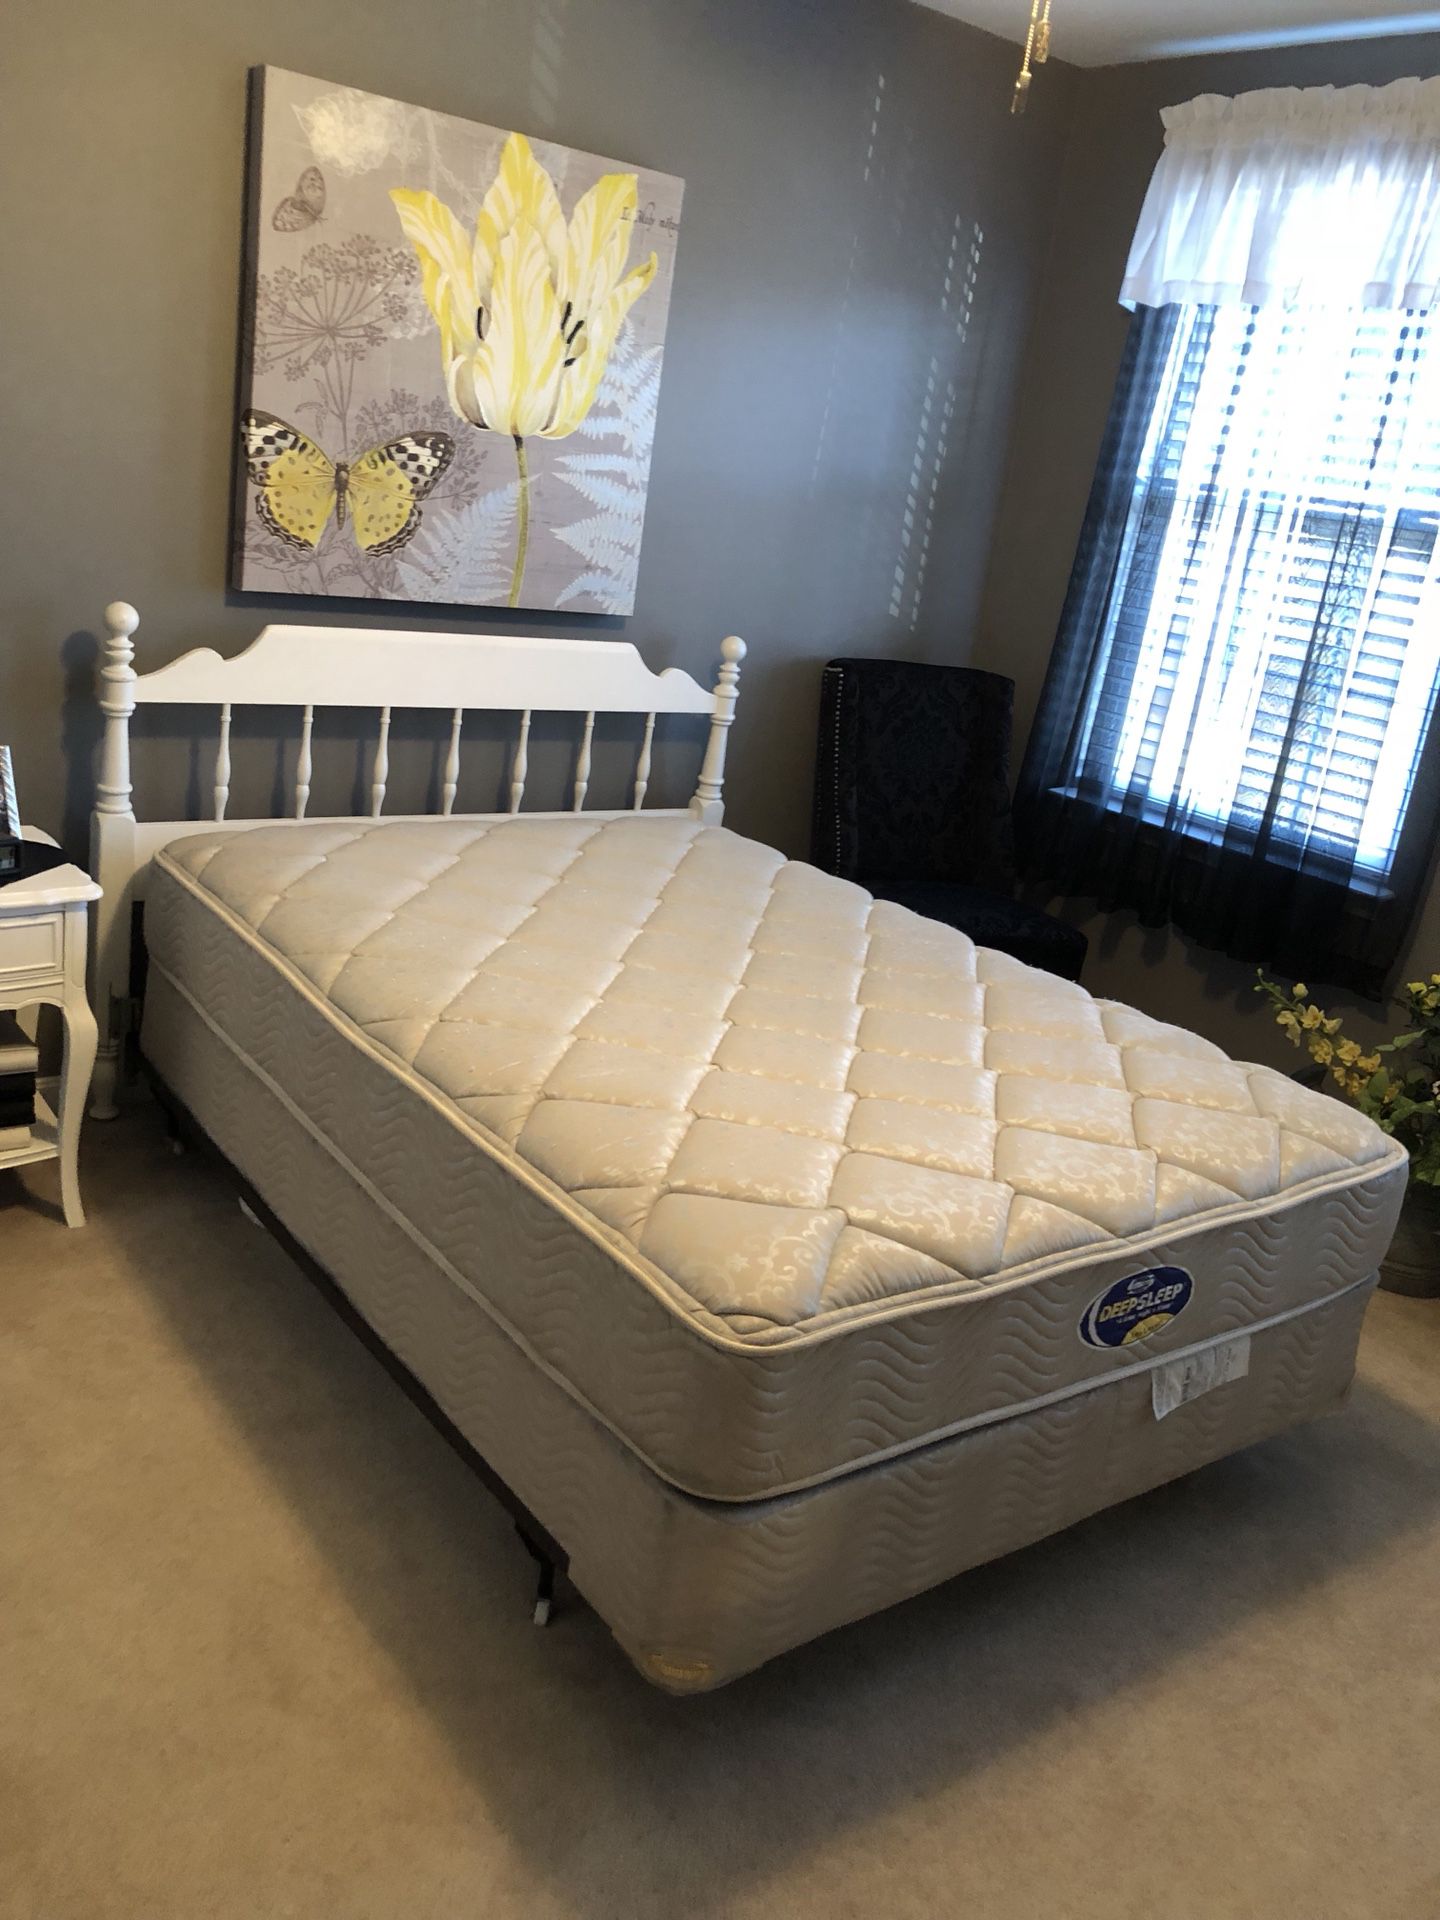 Full/double bed, headboard, sheets